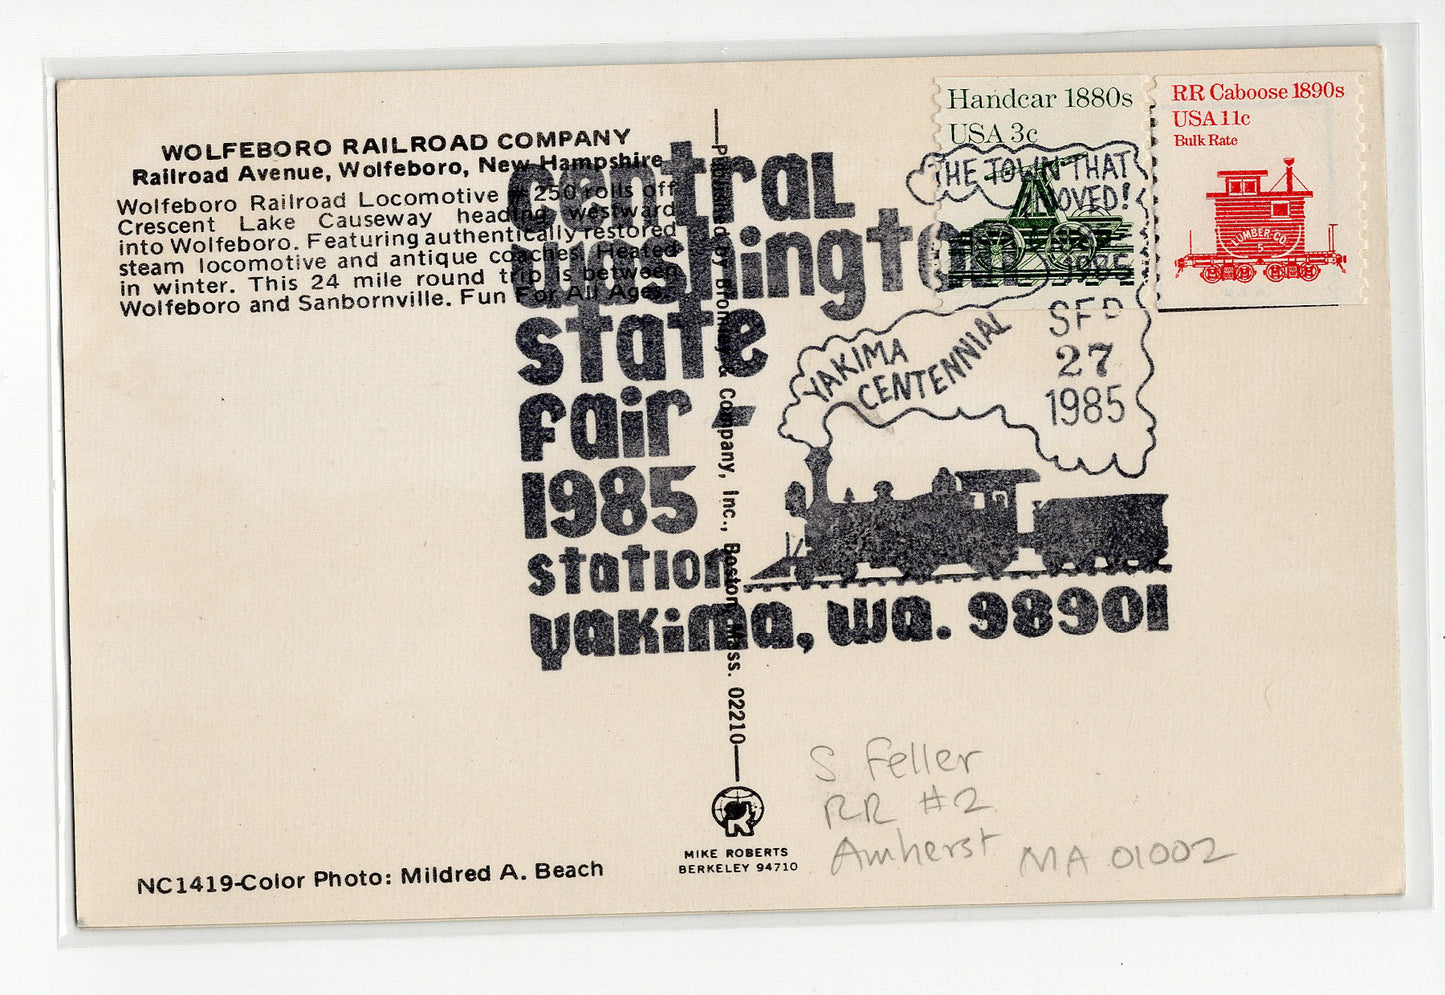 09 27 1985 Wolfeboro Railroad Washington State Fair PC8 58